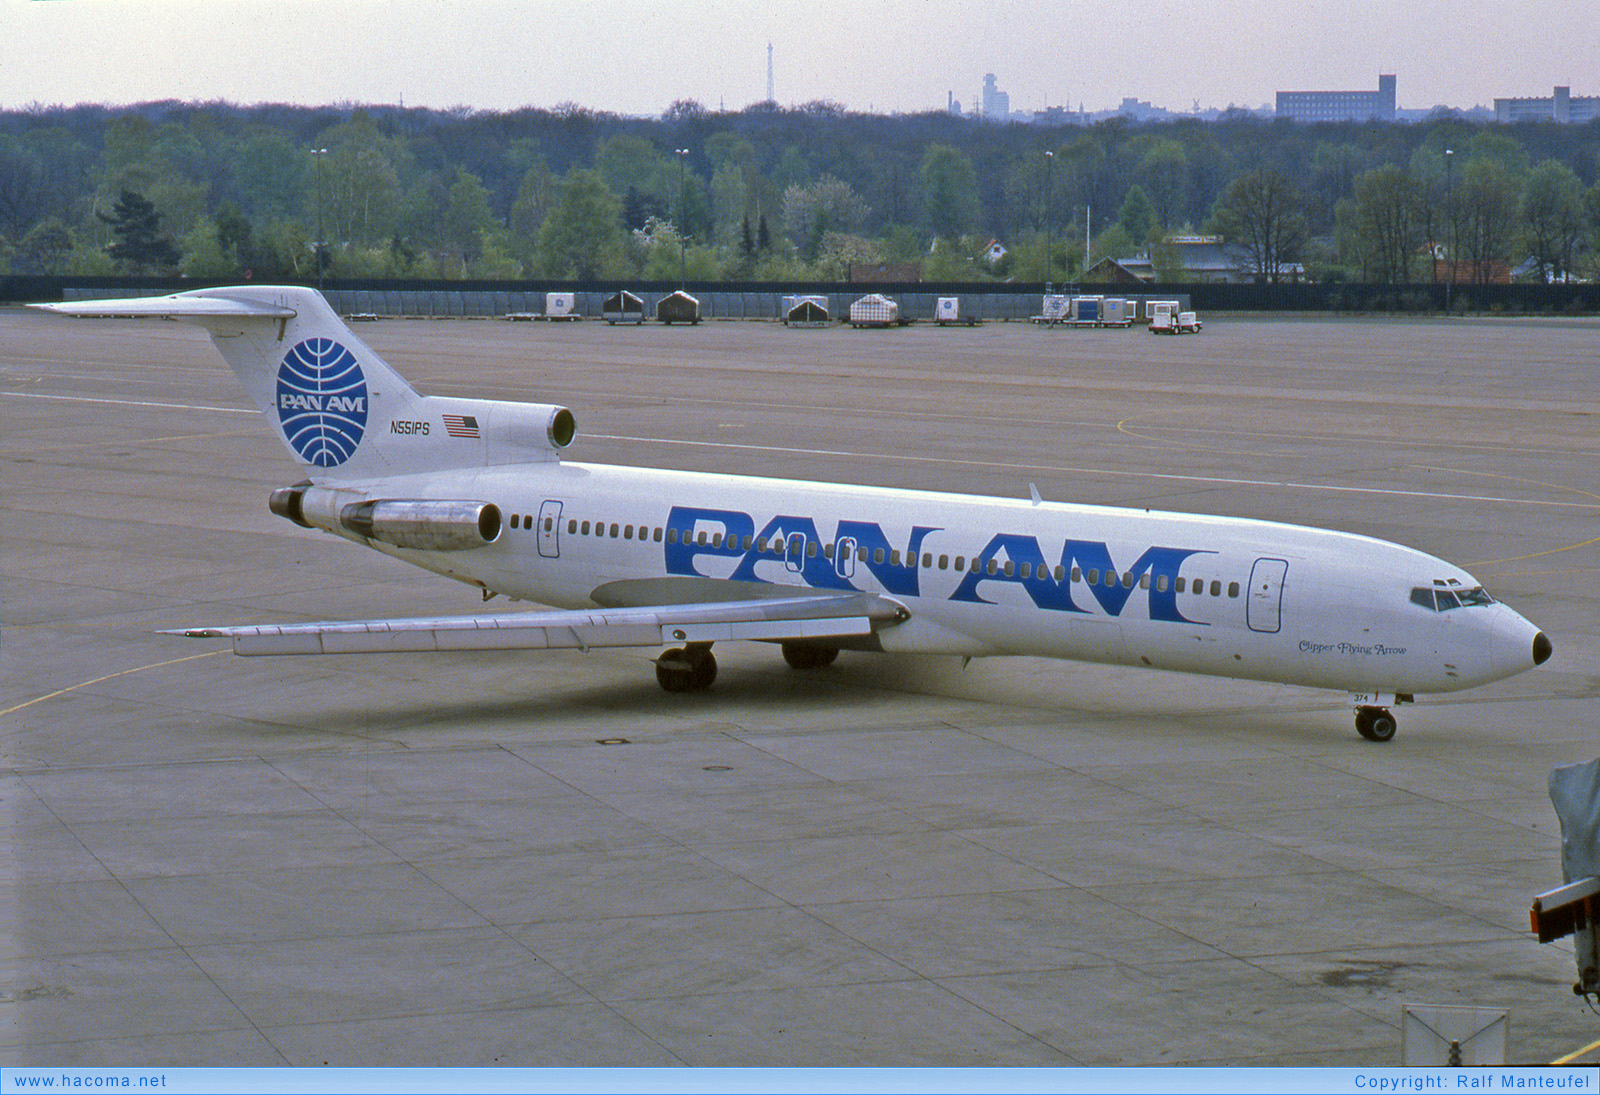 Photo of N374PA - Pan Am Clipper Flying Arrow - Berlin-Tegel Airport - May 1985